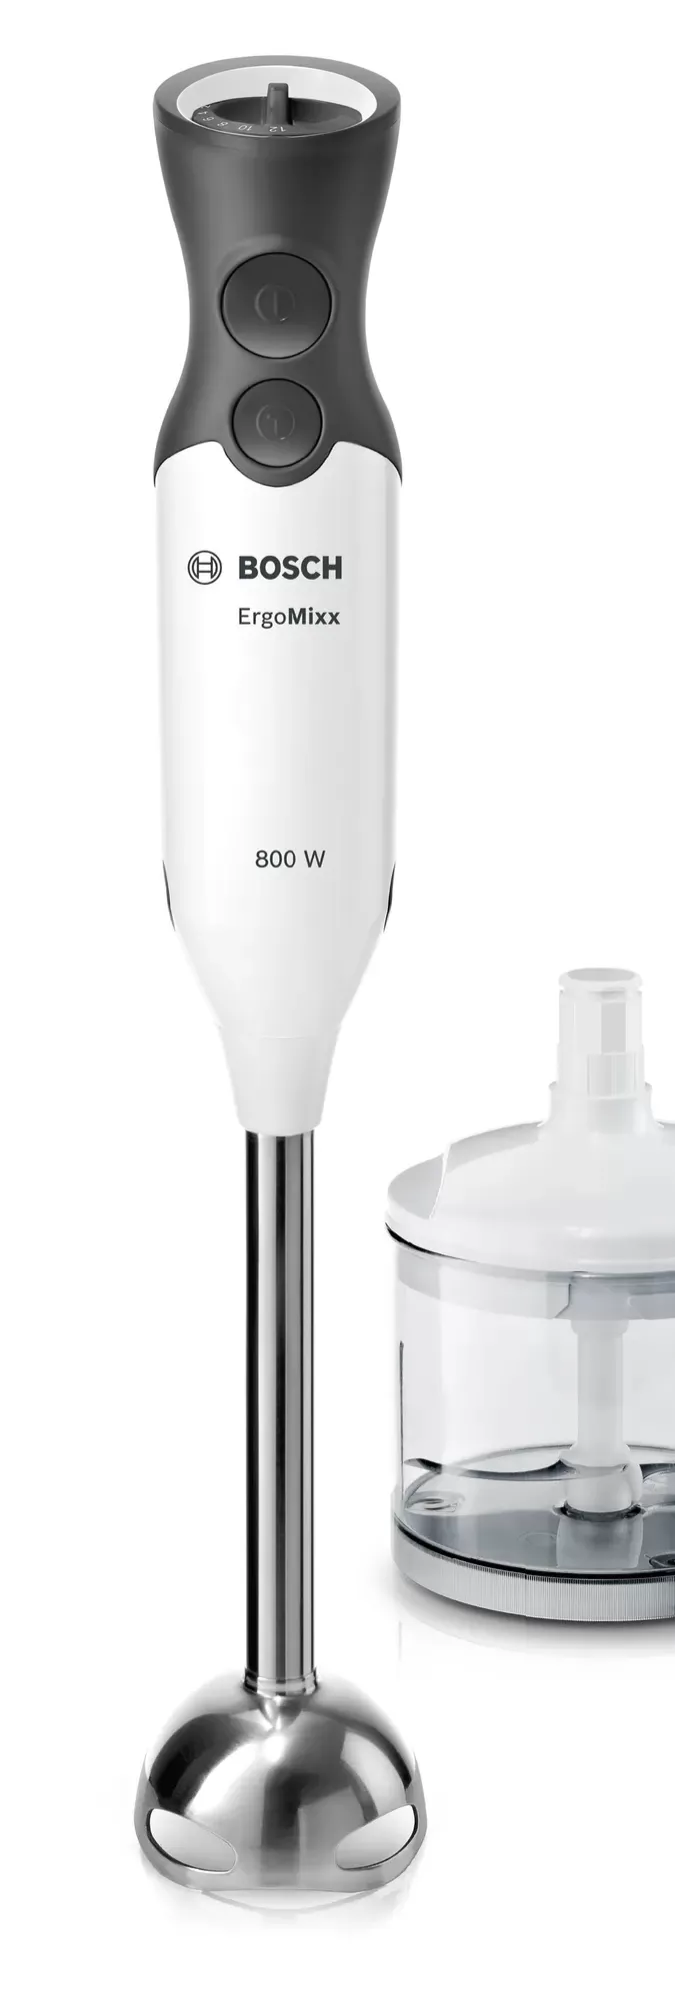 Пасатор, Bosch MS6CA4150, Blender, ErgoMixx, 800 W, Included transparent jug, chopper and stirrer, White, anthracite - image 5